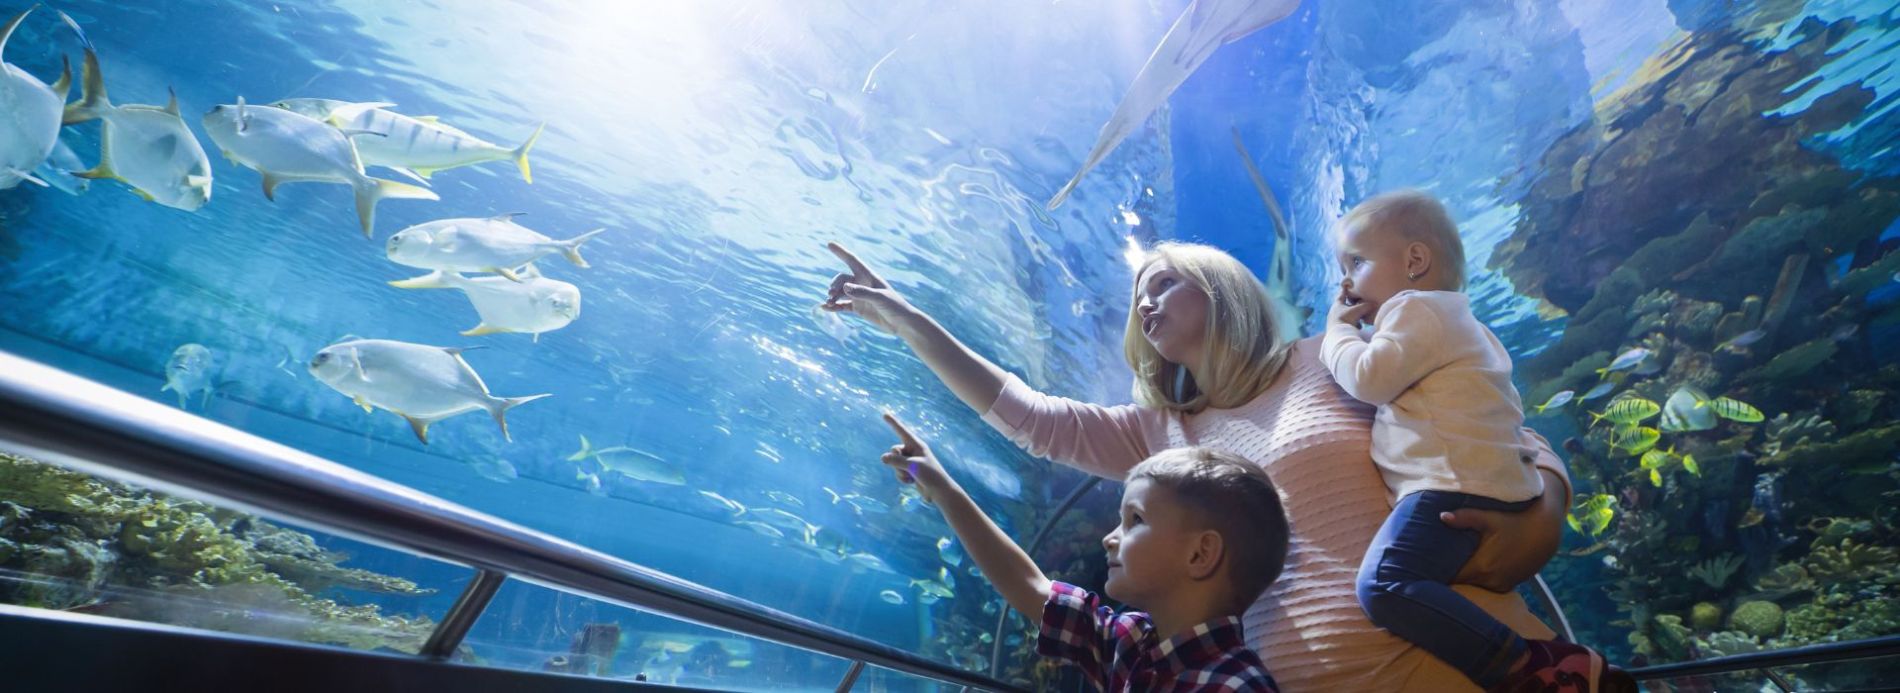 Family looking at fish in aquarium